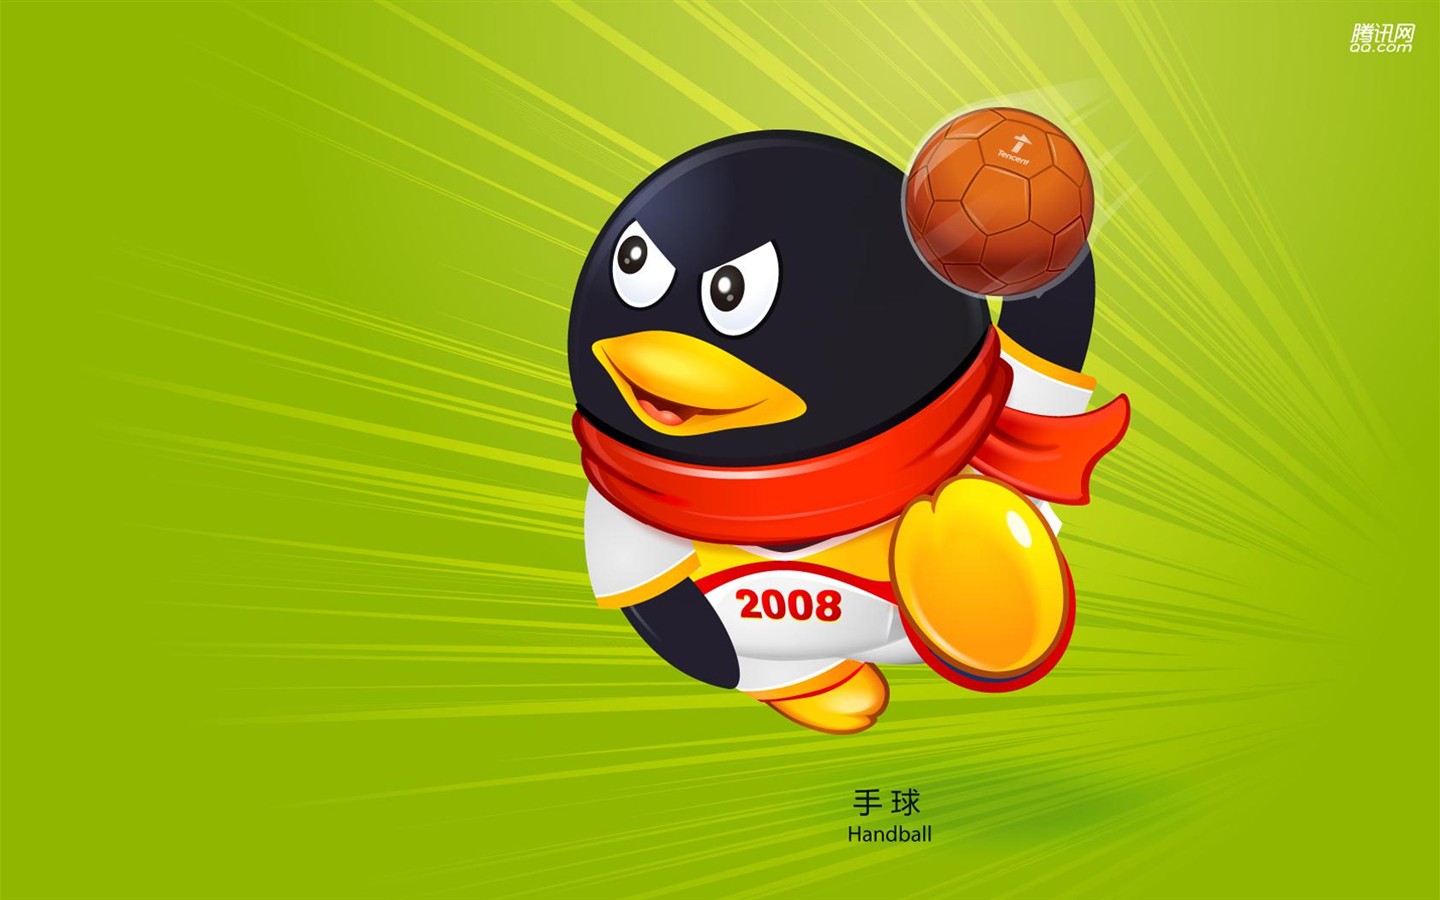 QQ Olympic sports theme wallpaper #6 - 1440x900